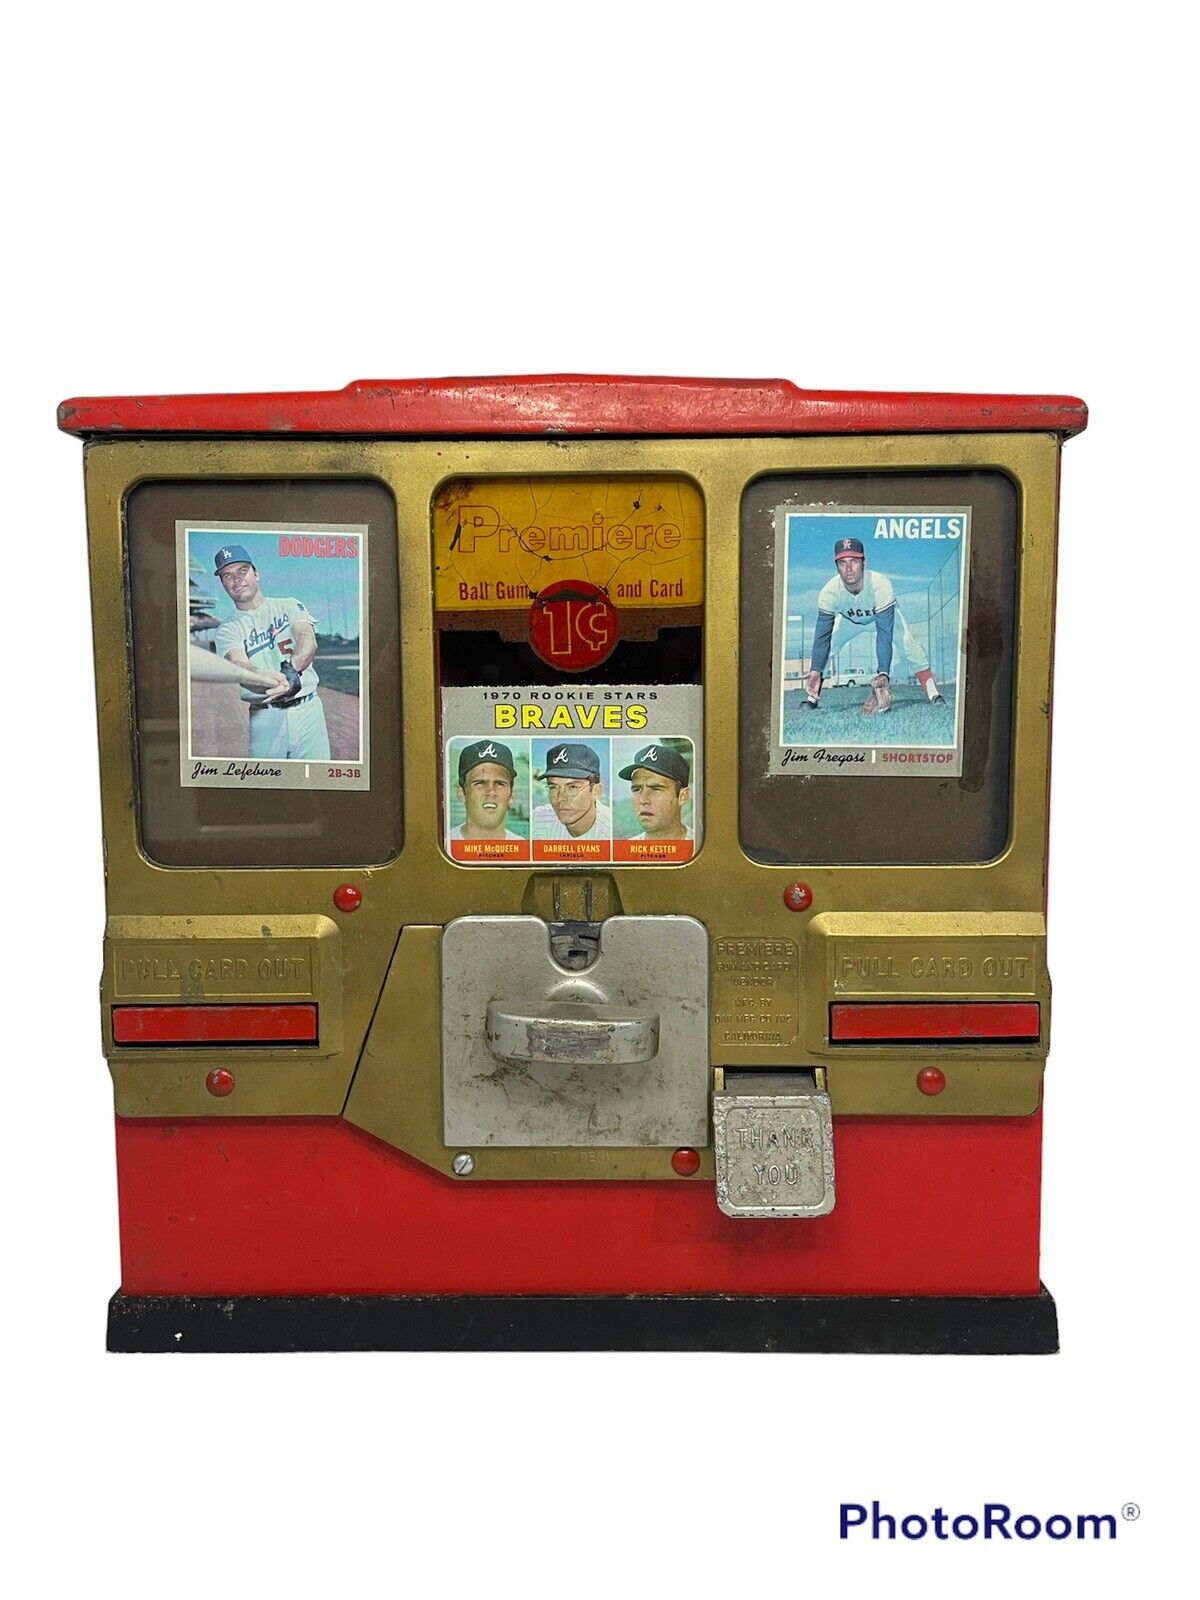 All Original 1950s Oak Premiere Baseball Card/Gumball Vending Machine